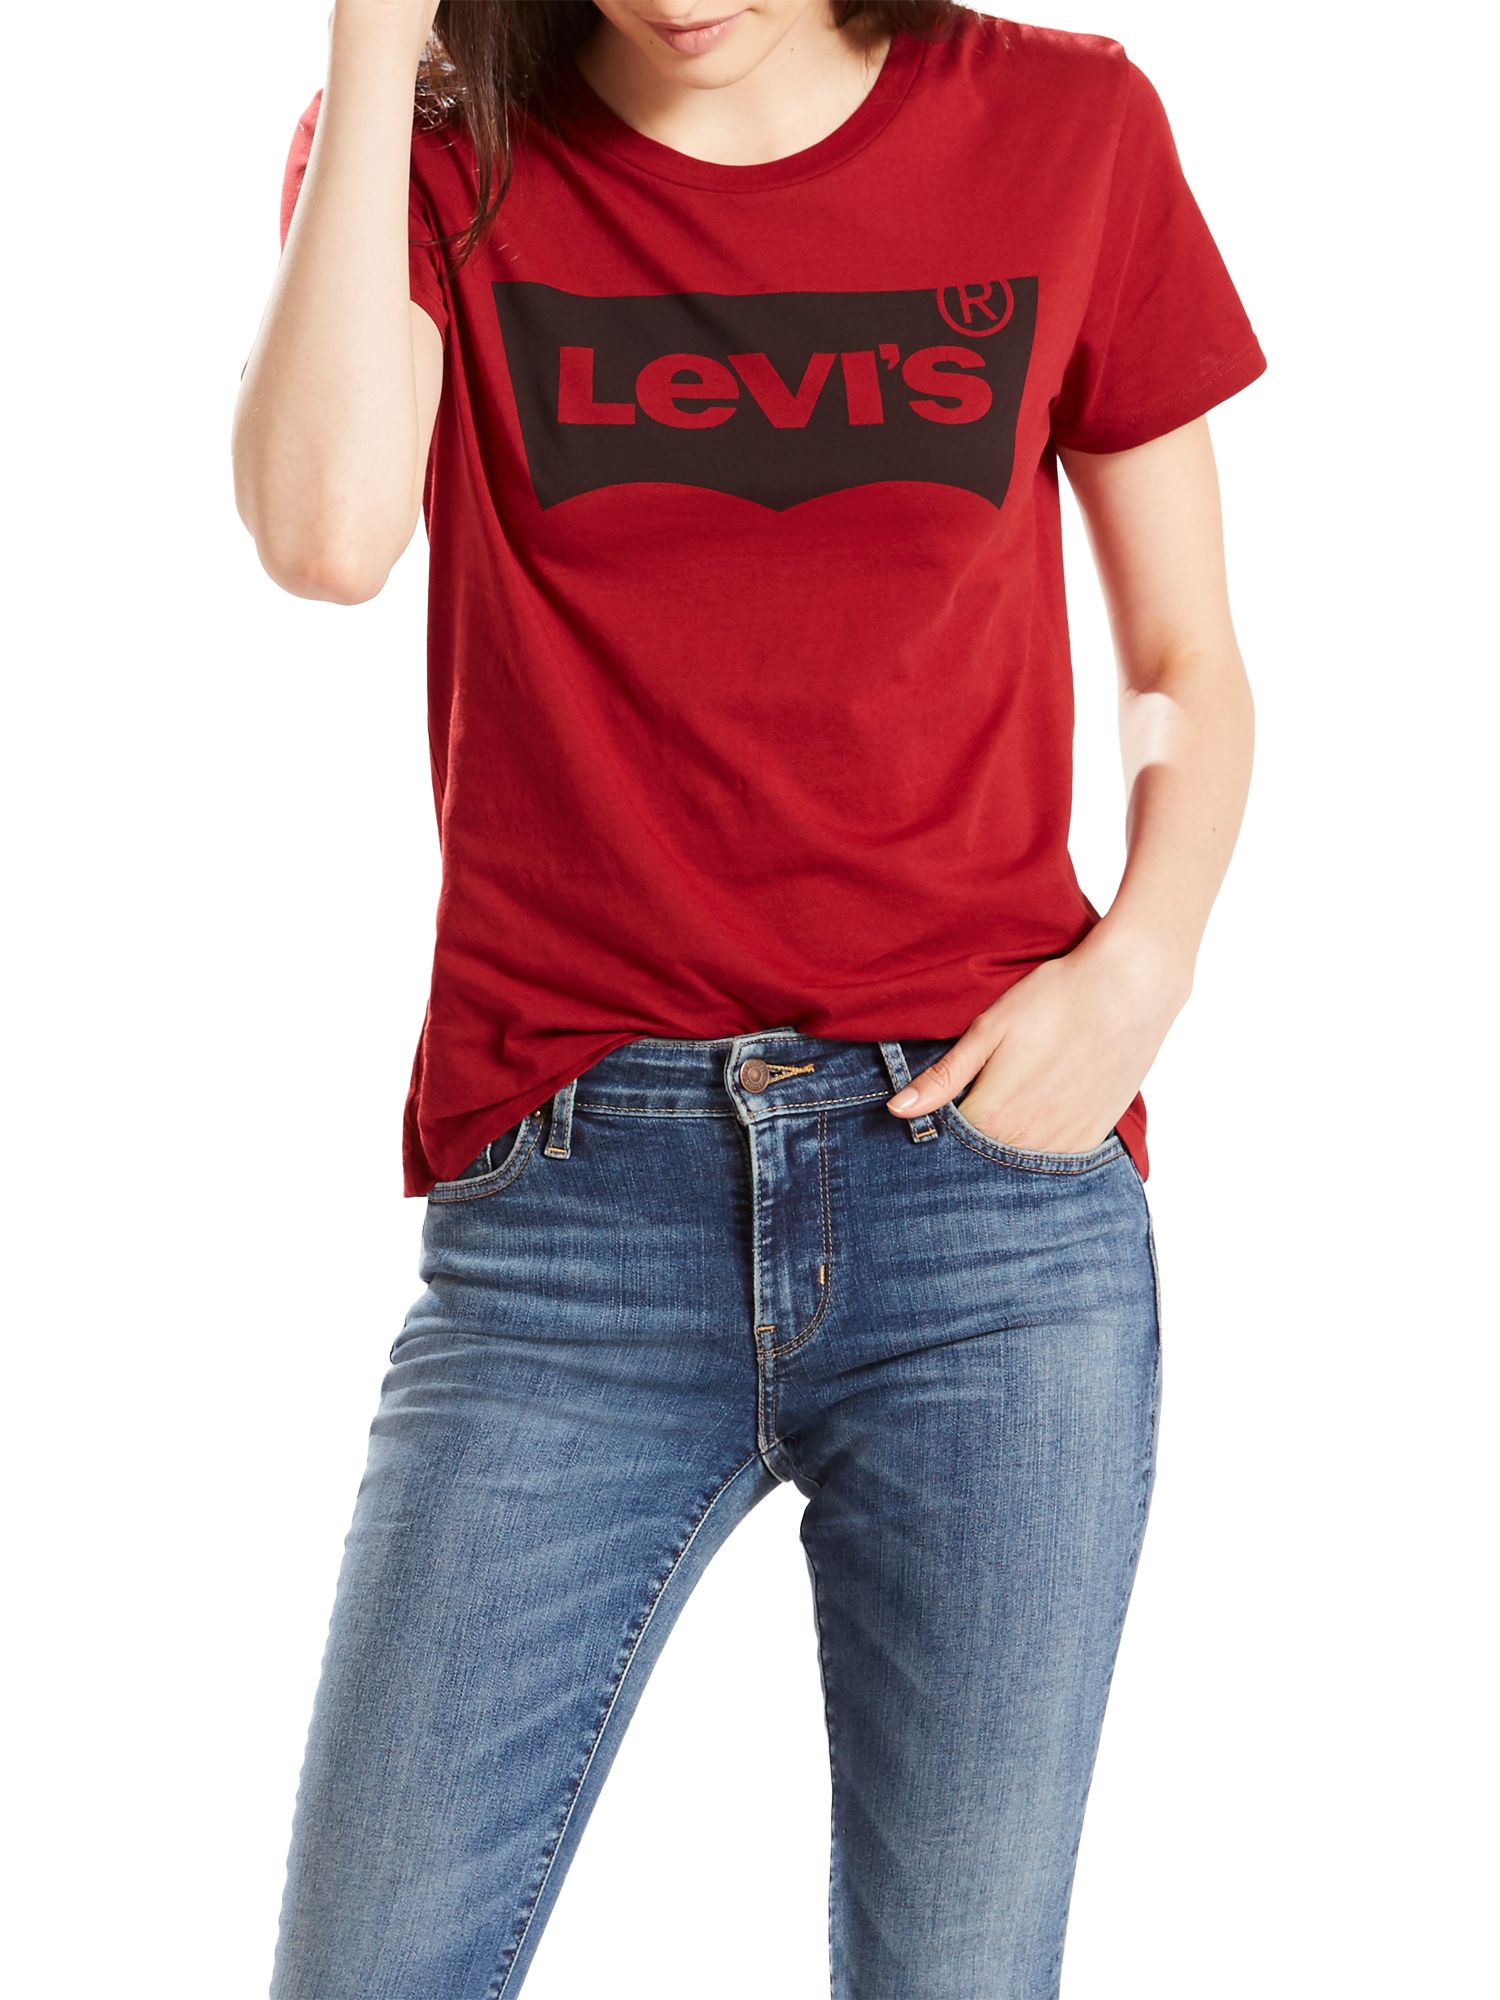 levis t shirt xxs